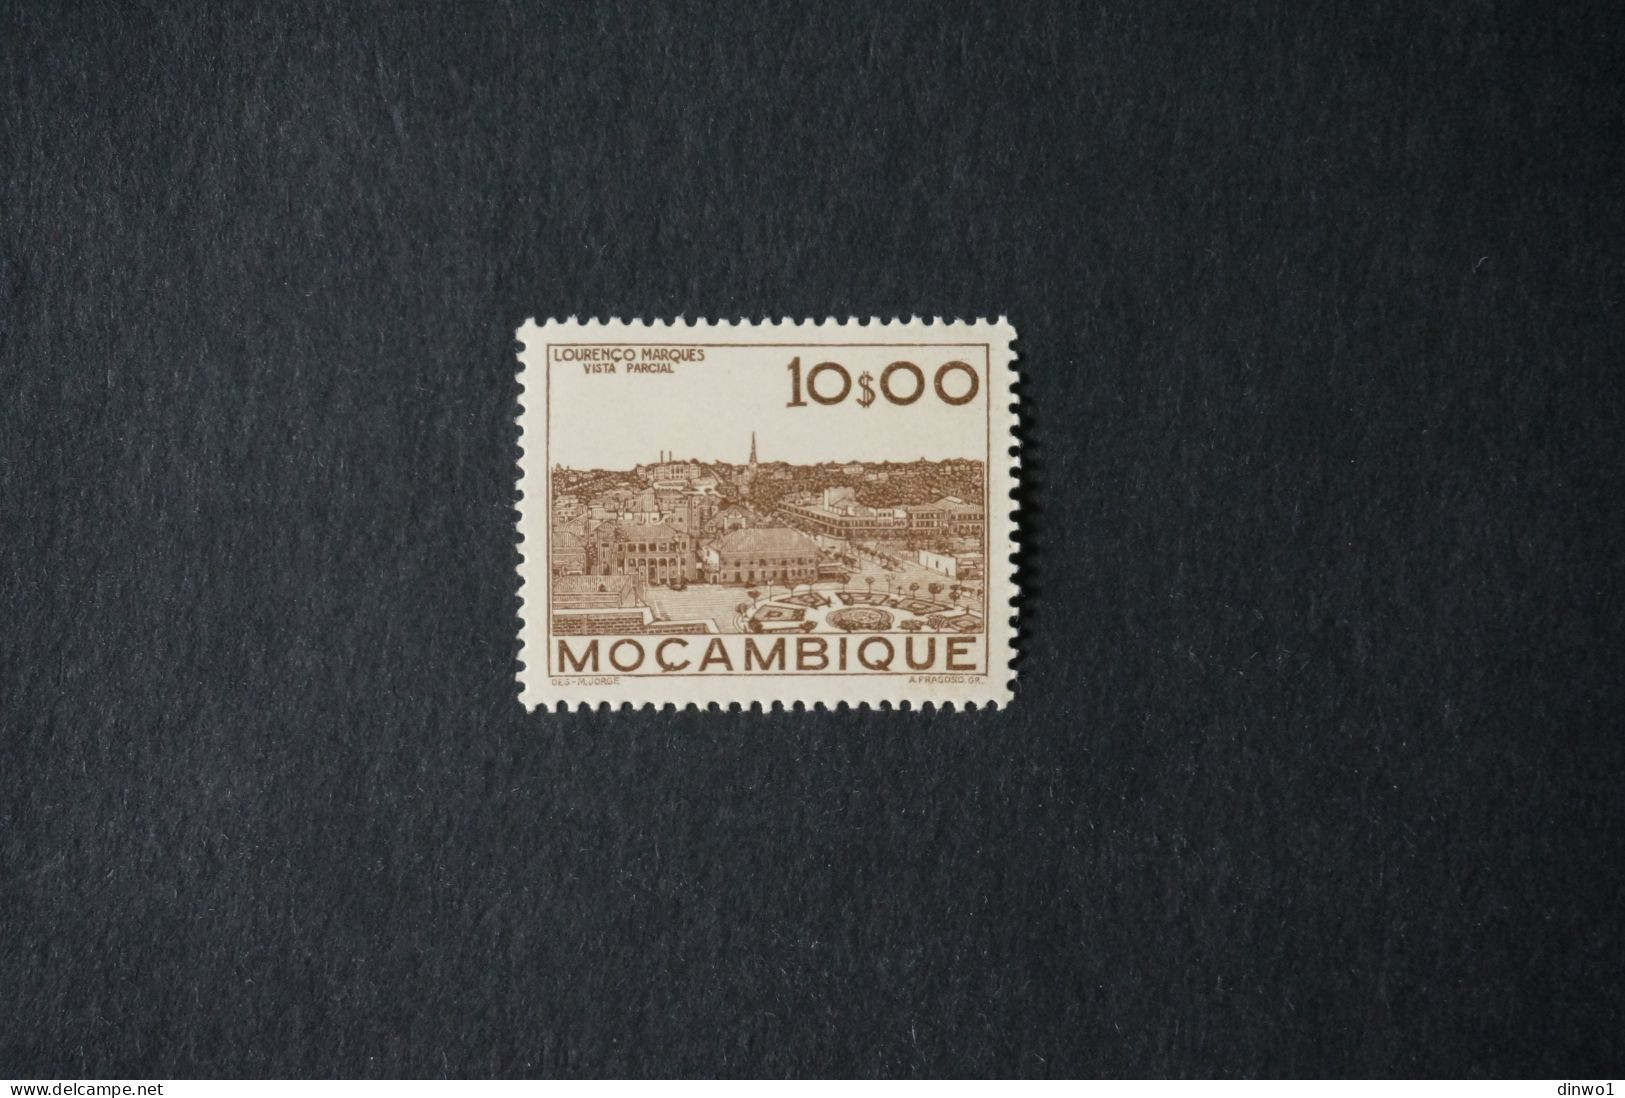 (T3) Mozambique - 1948 Local Views 10$00 - MNH - Mozambique